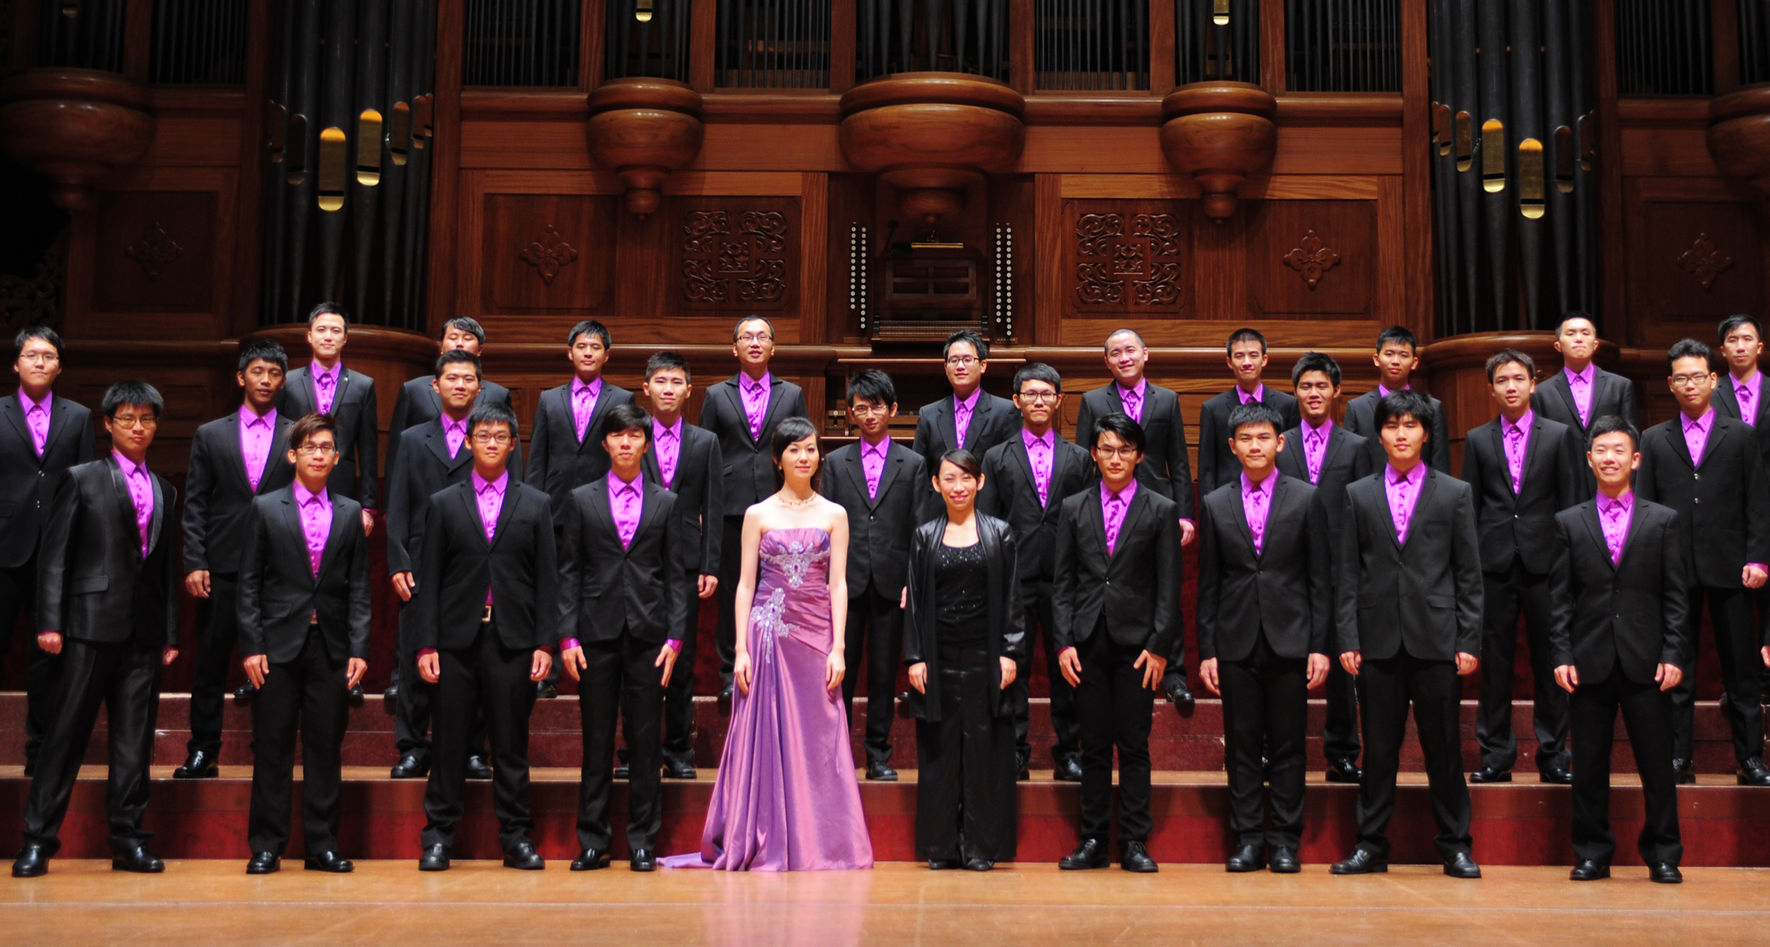 Gewinner des Johannes Brahms Chorpreises 2015: The Müller Chamber Choir (Chinese Taipei)